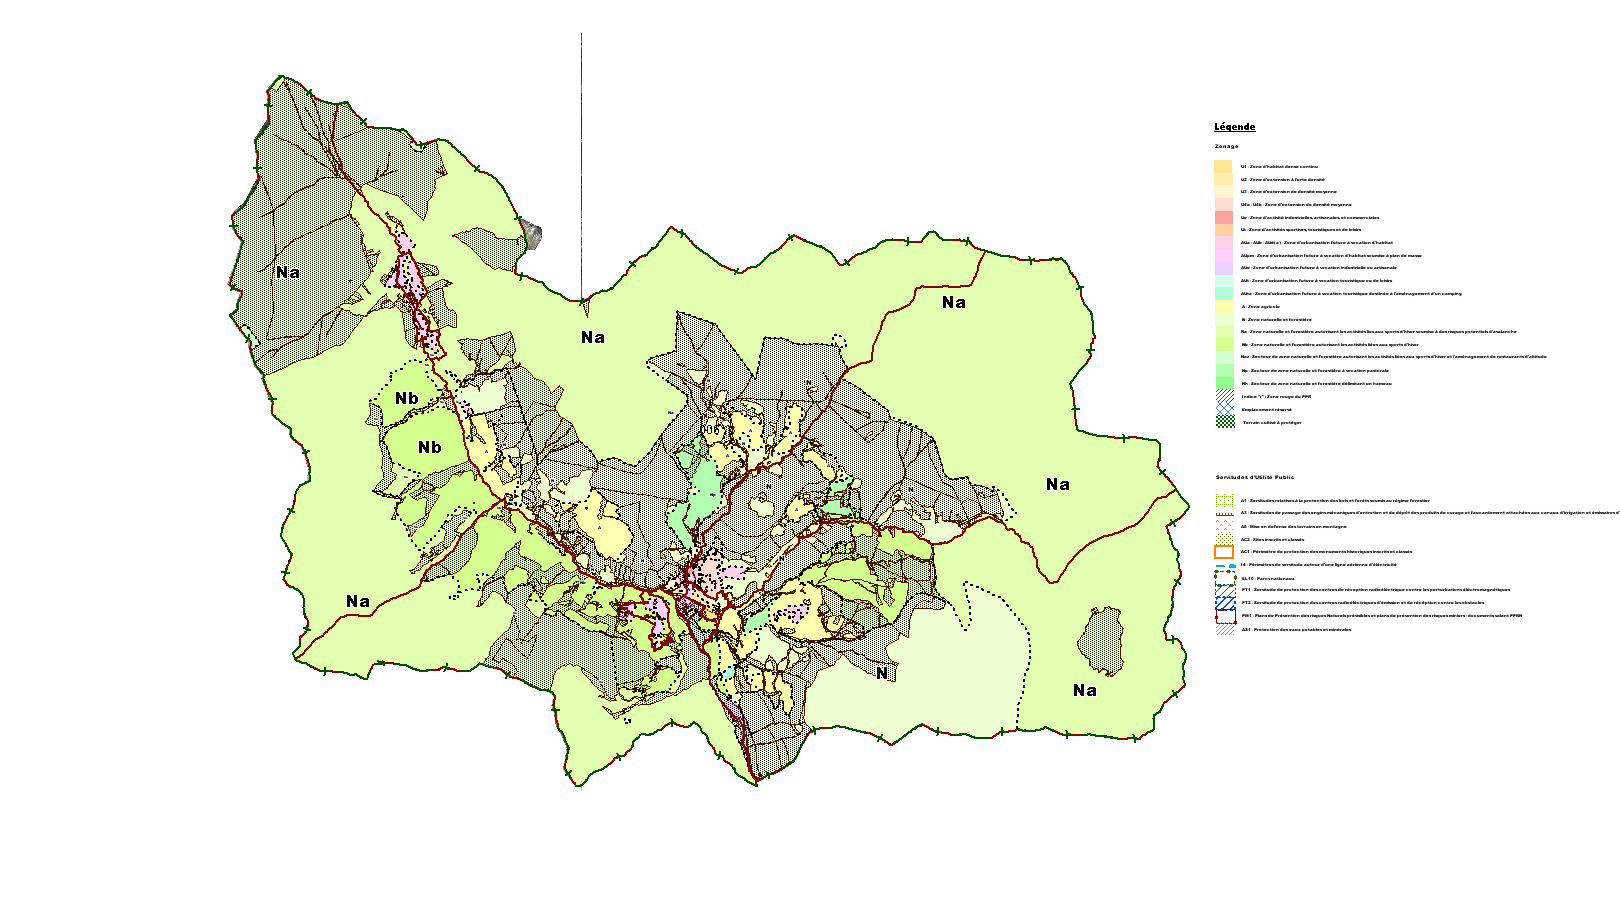 Plan Local d'Urbanisme (PLU)